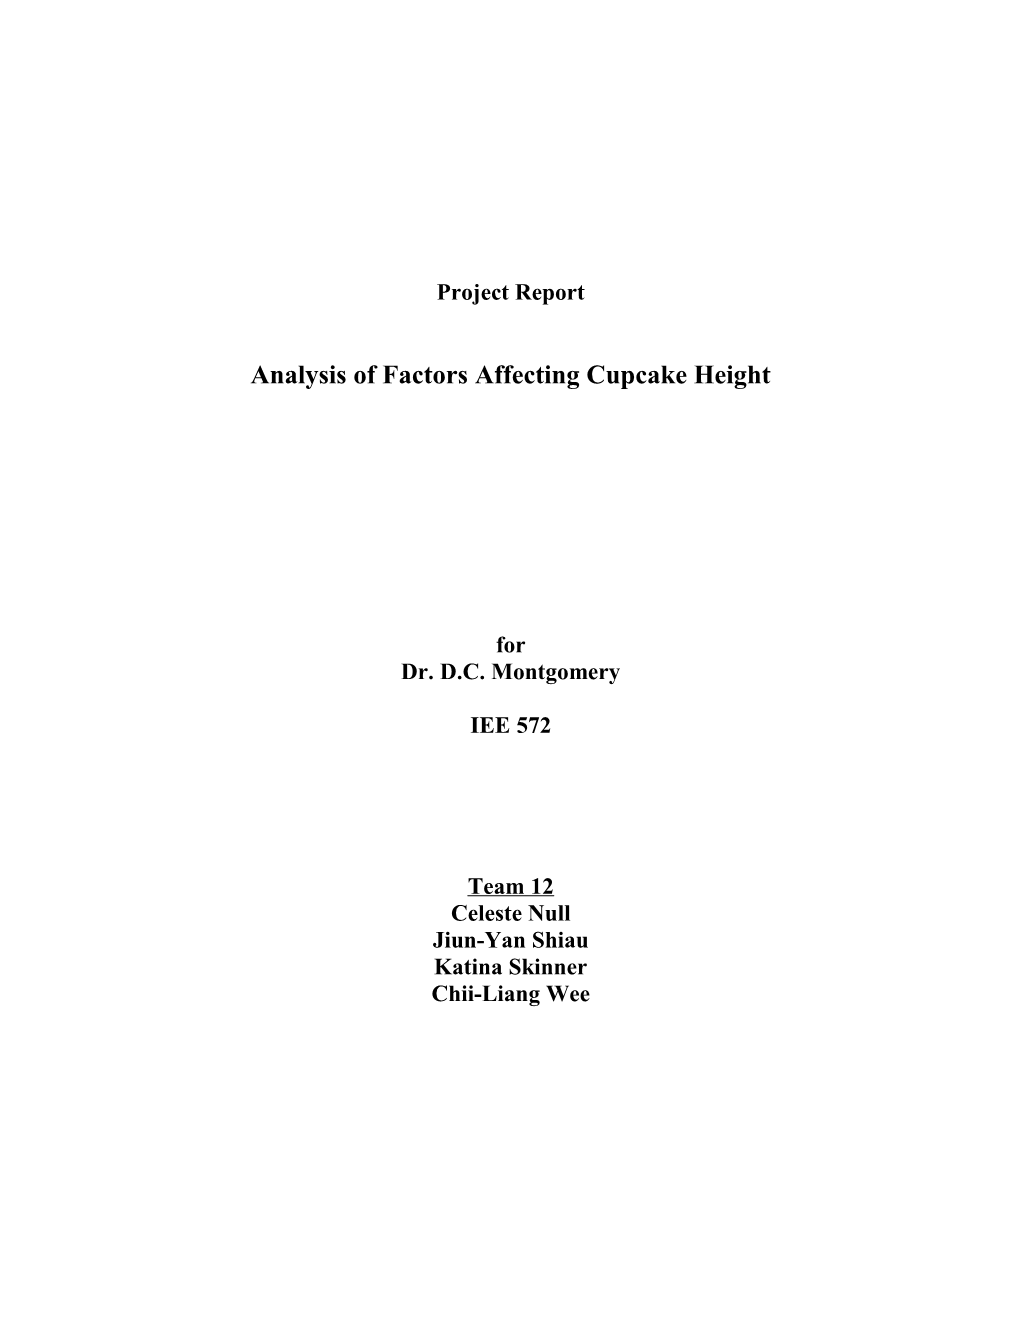 Analysis of Factors Affecting Cupcake Height